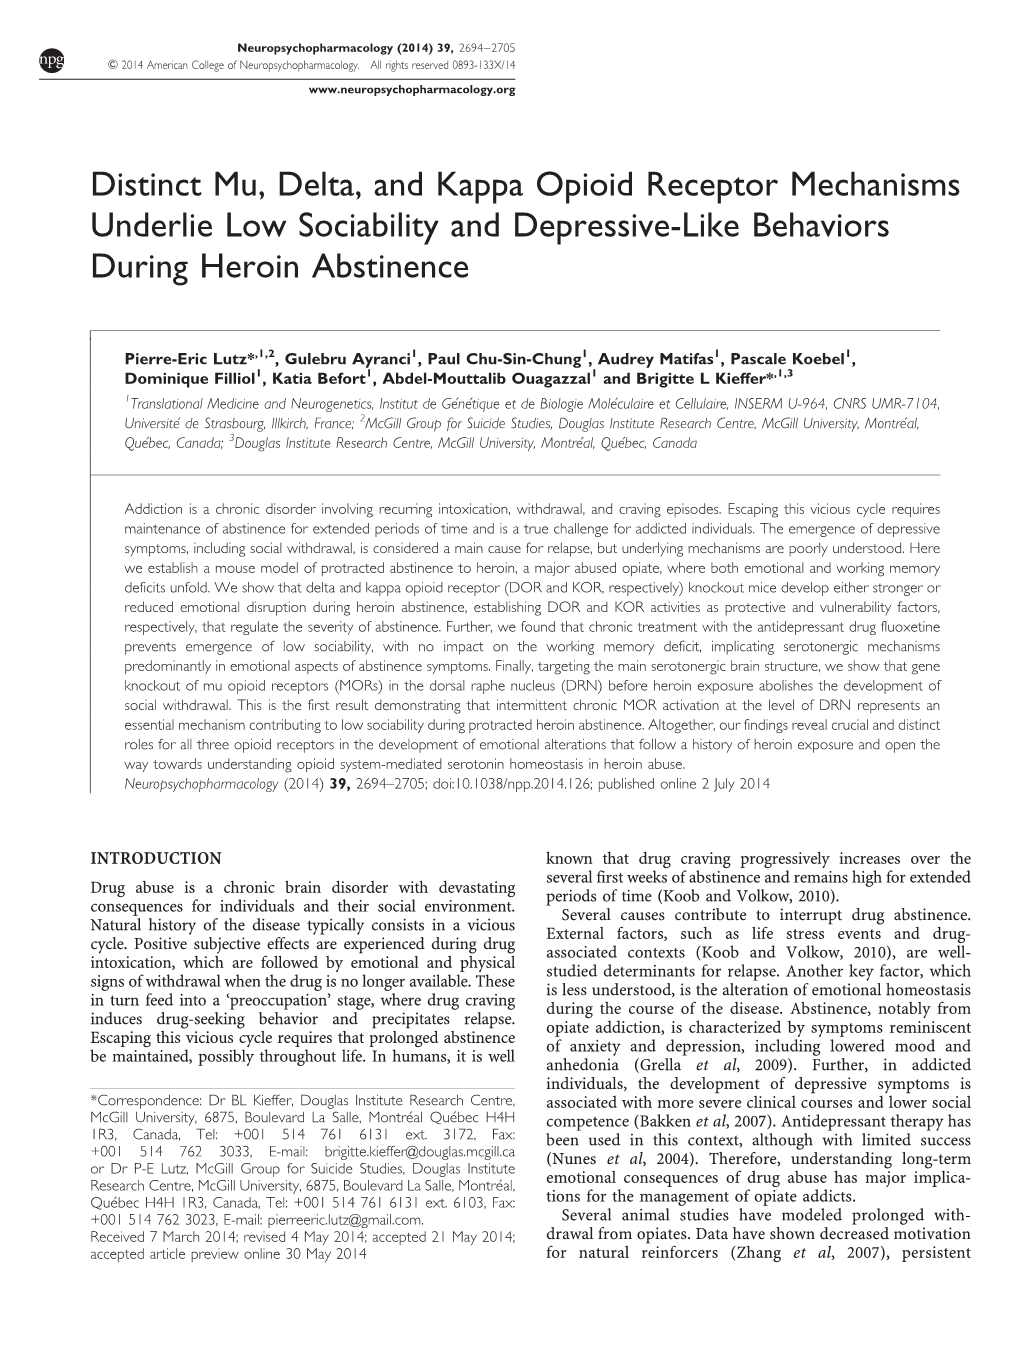 Distinct Mu, Delta, and Kappa Opioid Receptor Mechanisms Underlie Low Sociability and Depressive-Like Behaviors During Heroin Abstinence